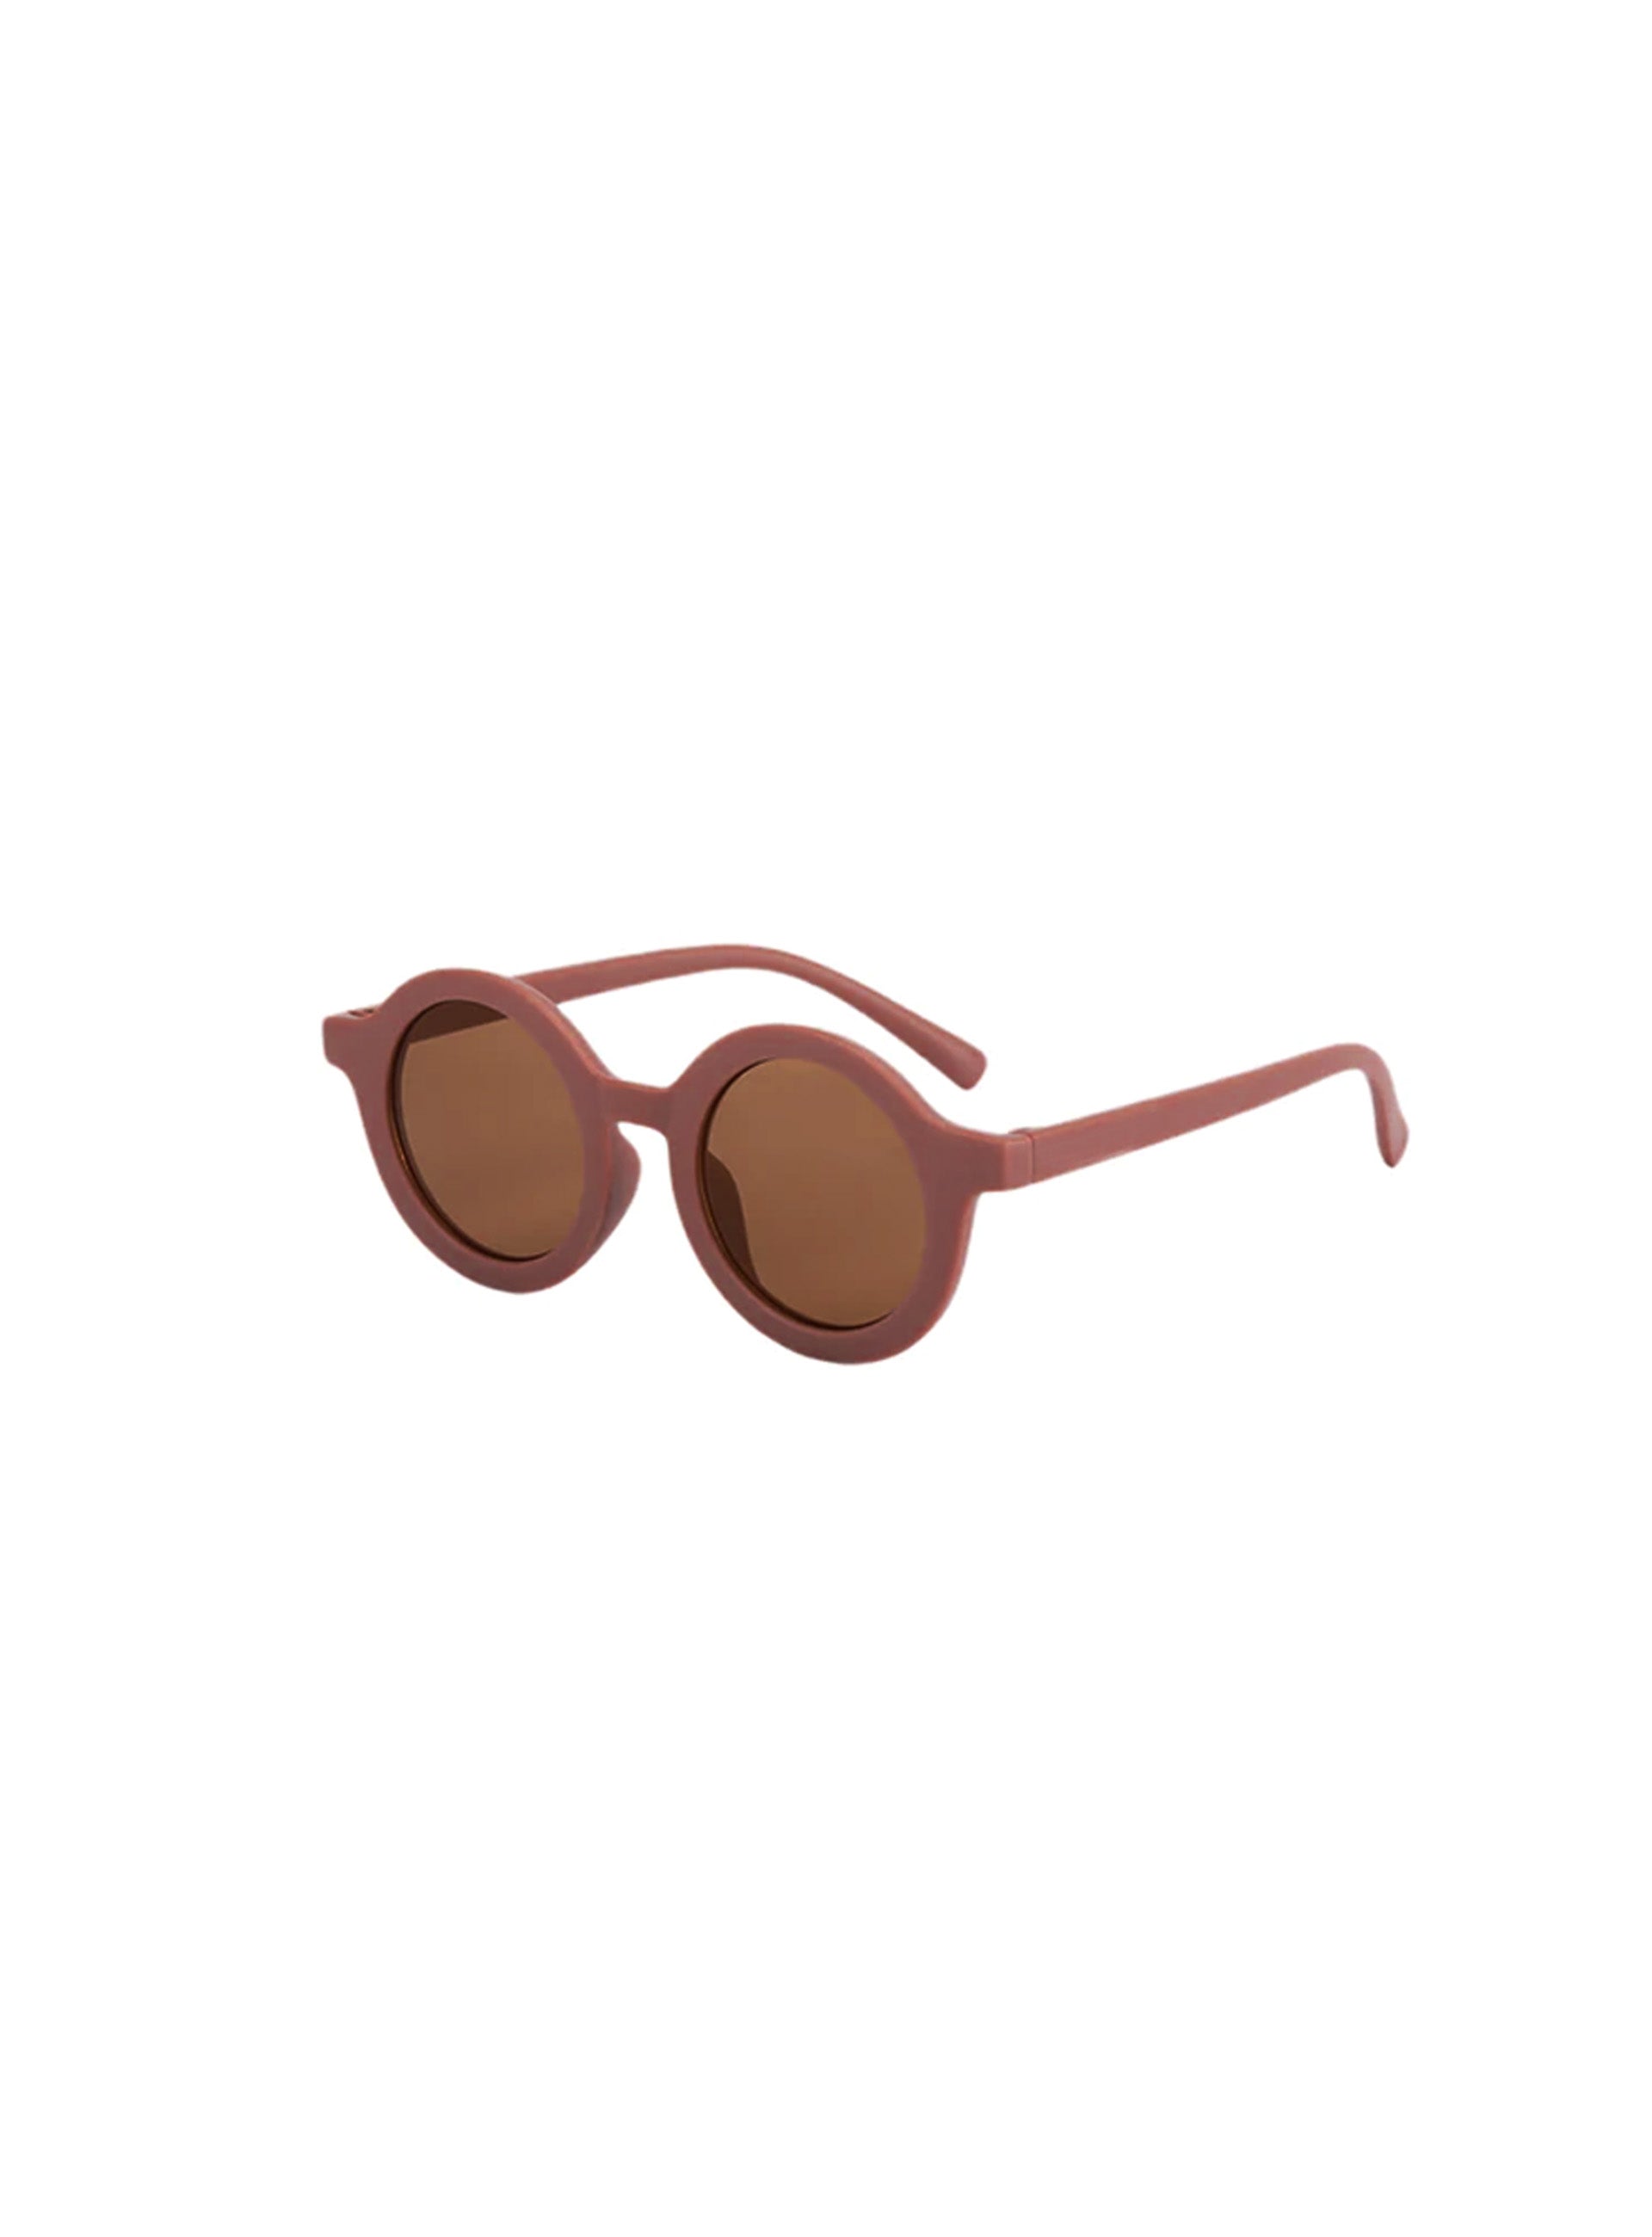 chocolate syrup round sunglasses